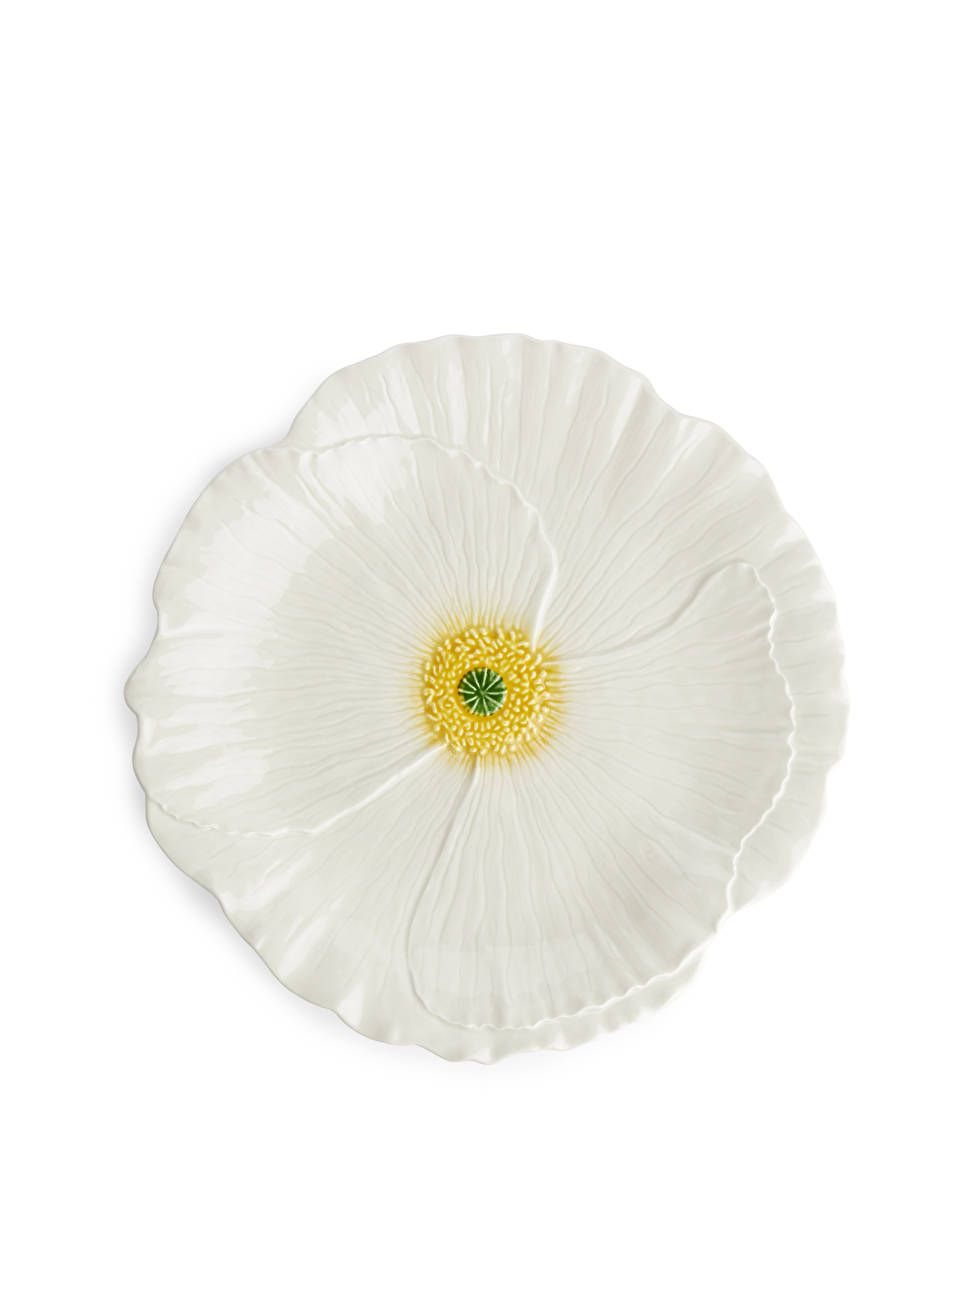 San Raphael Wild Flower Plate 29 cm | ARKET